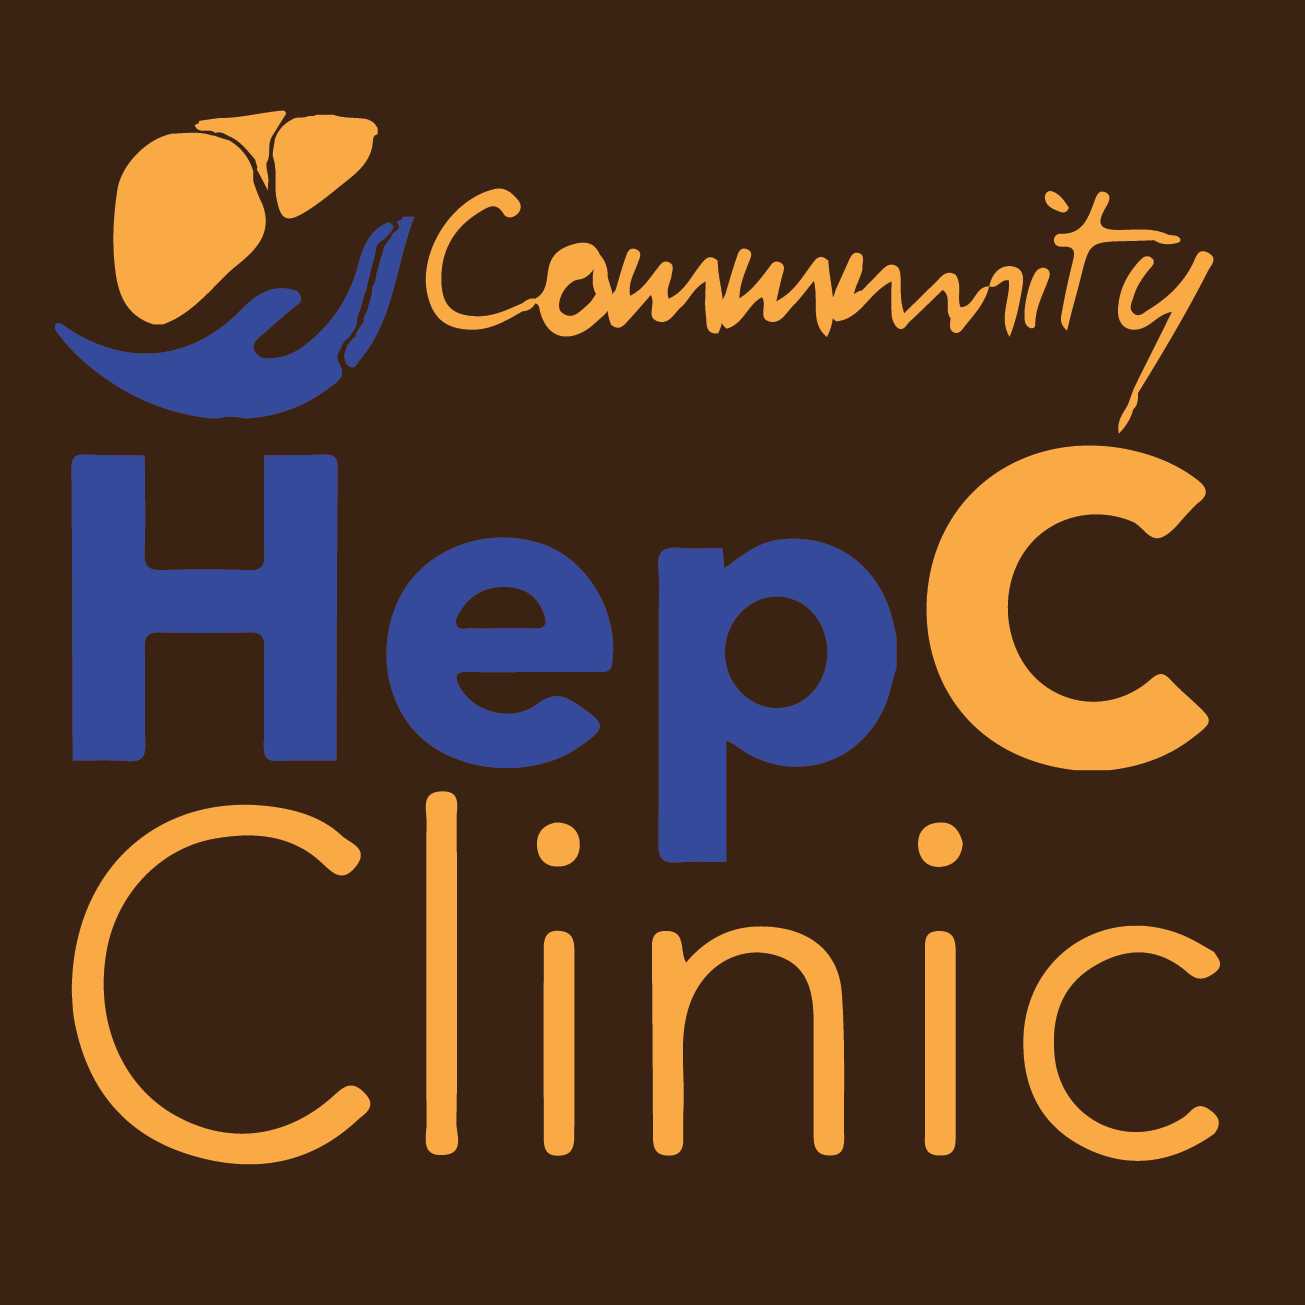 Community Hep C Clinic